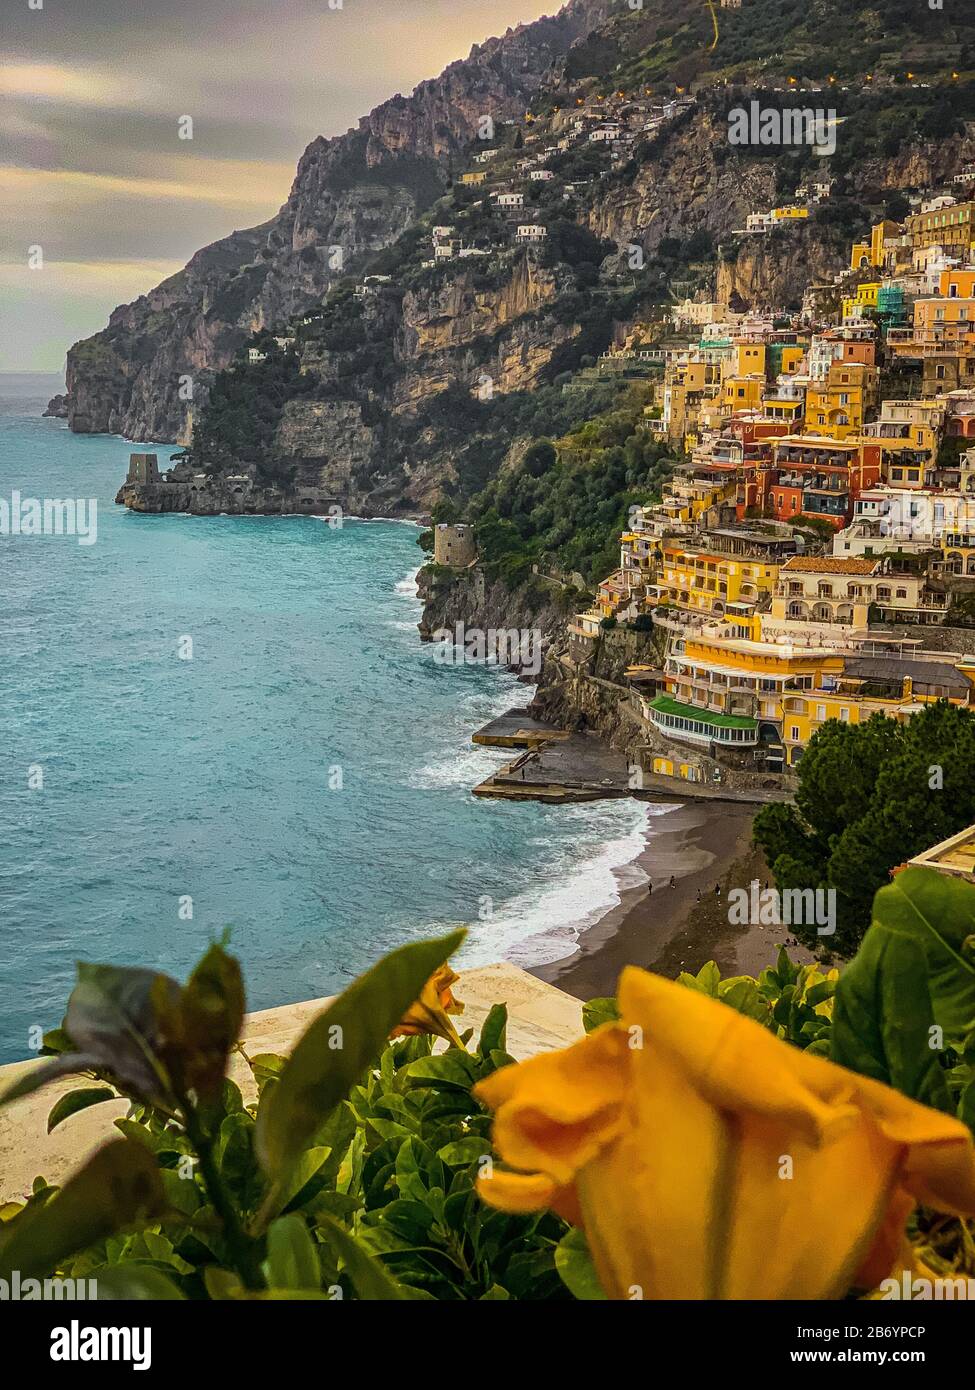 123RF.com Blick auf Positano Stadt an der Amalfiküste, Italien Stockfoto